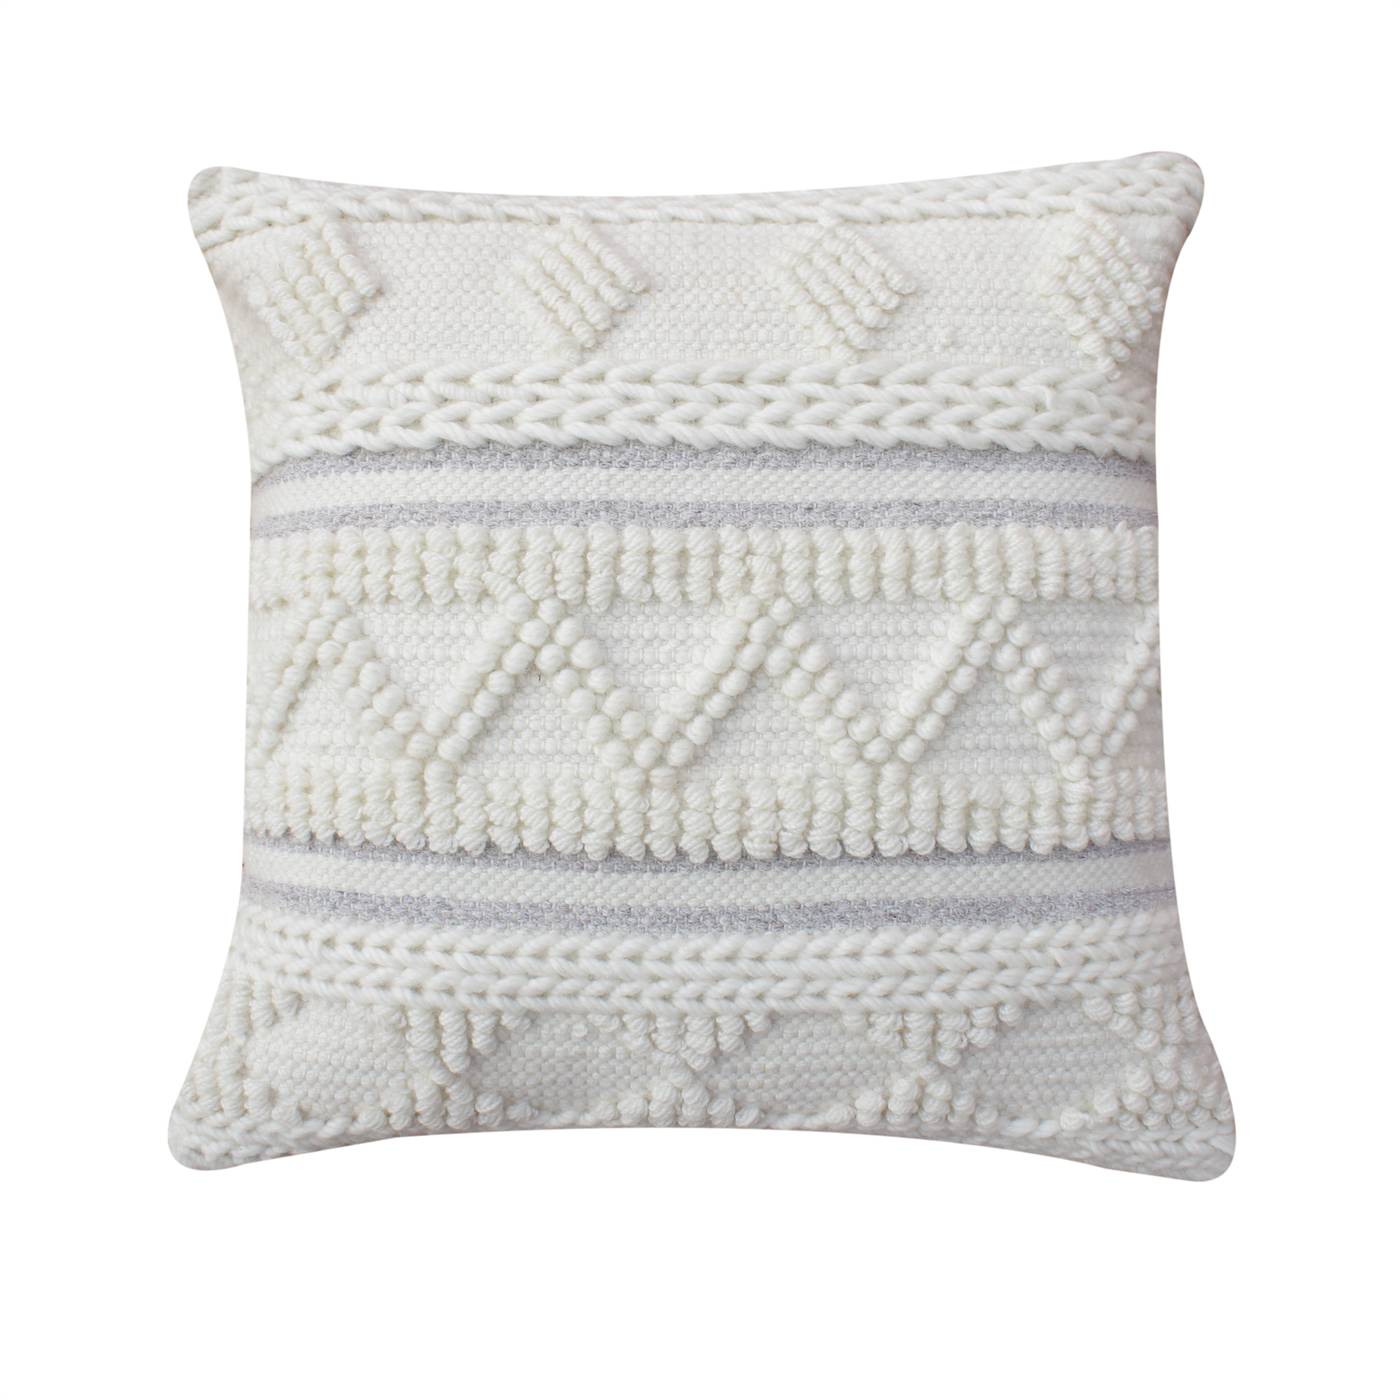 Morado Cushion, 45x45 cm, Natural White, NZ Wool, Hand Made, Pitloom, All Loop